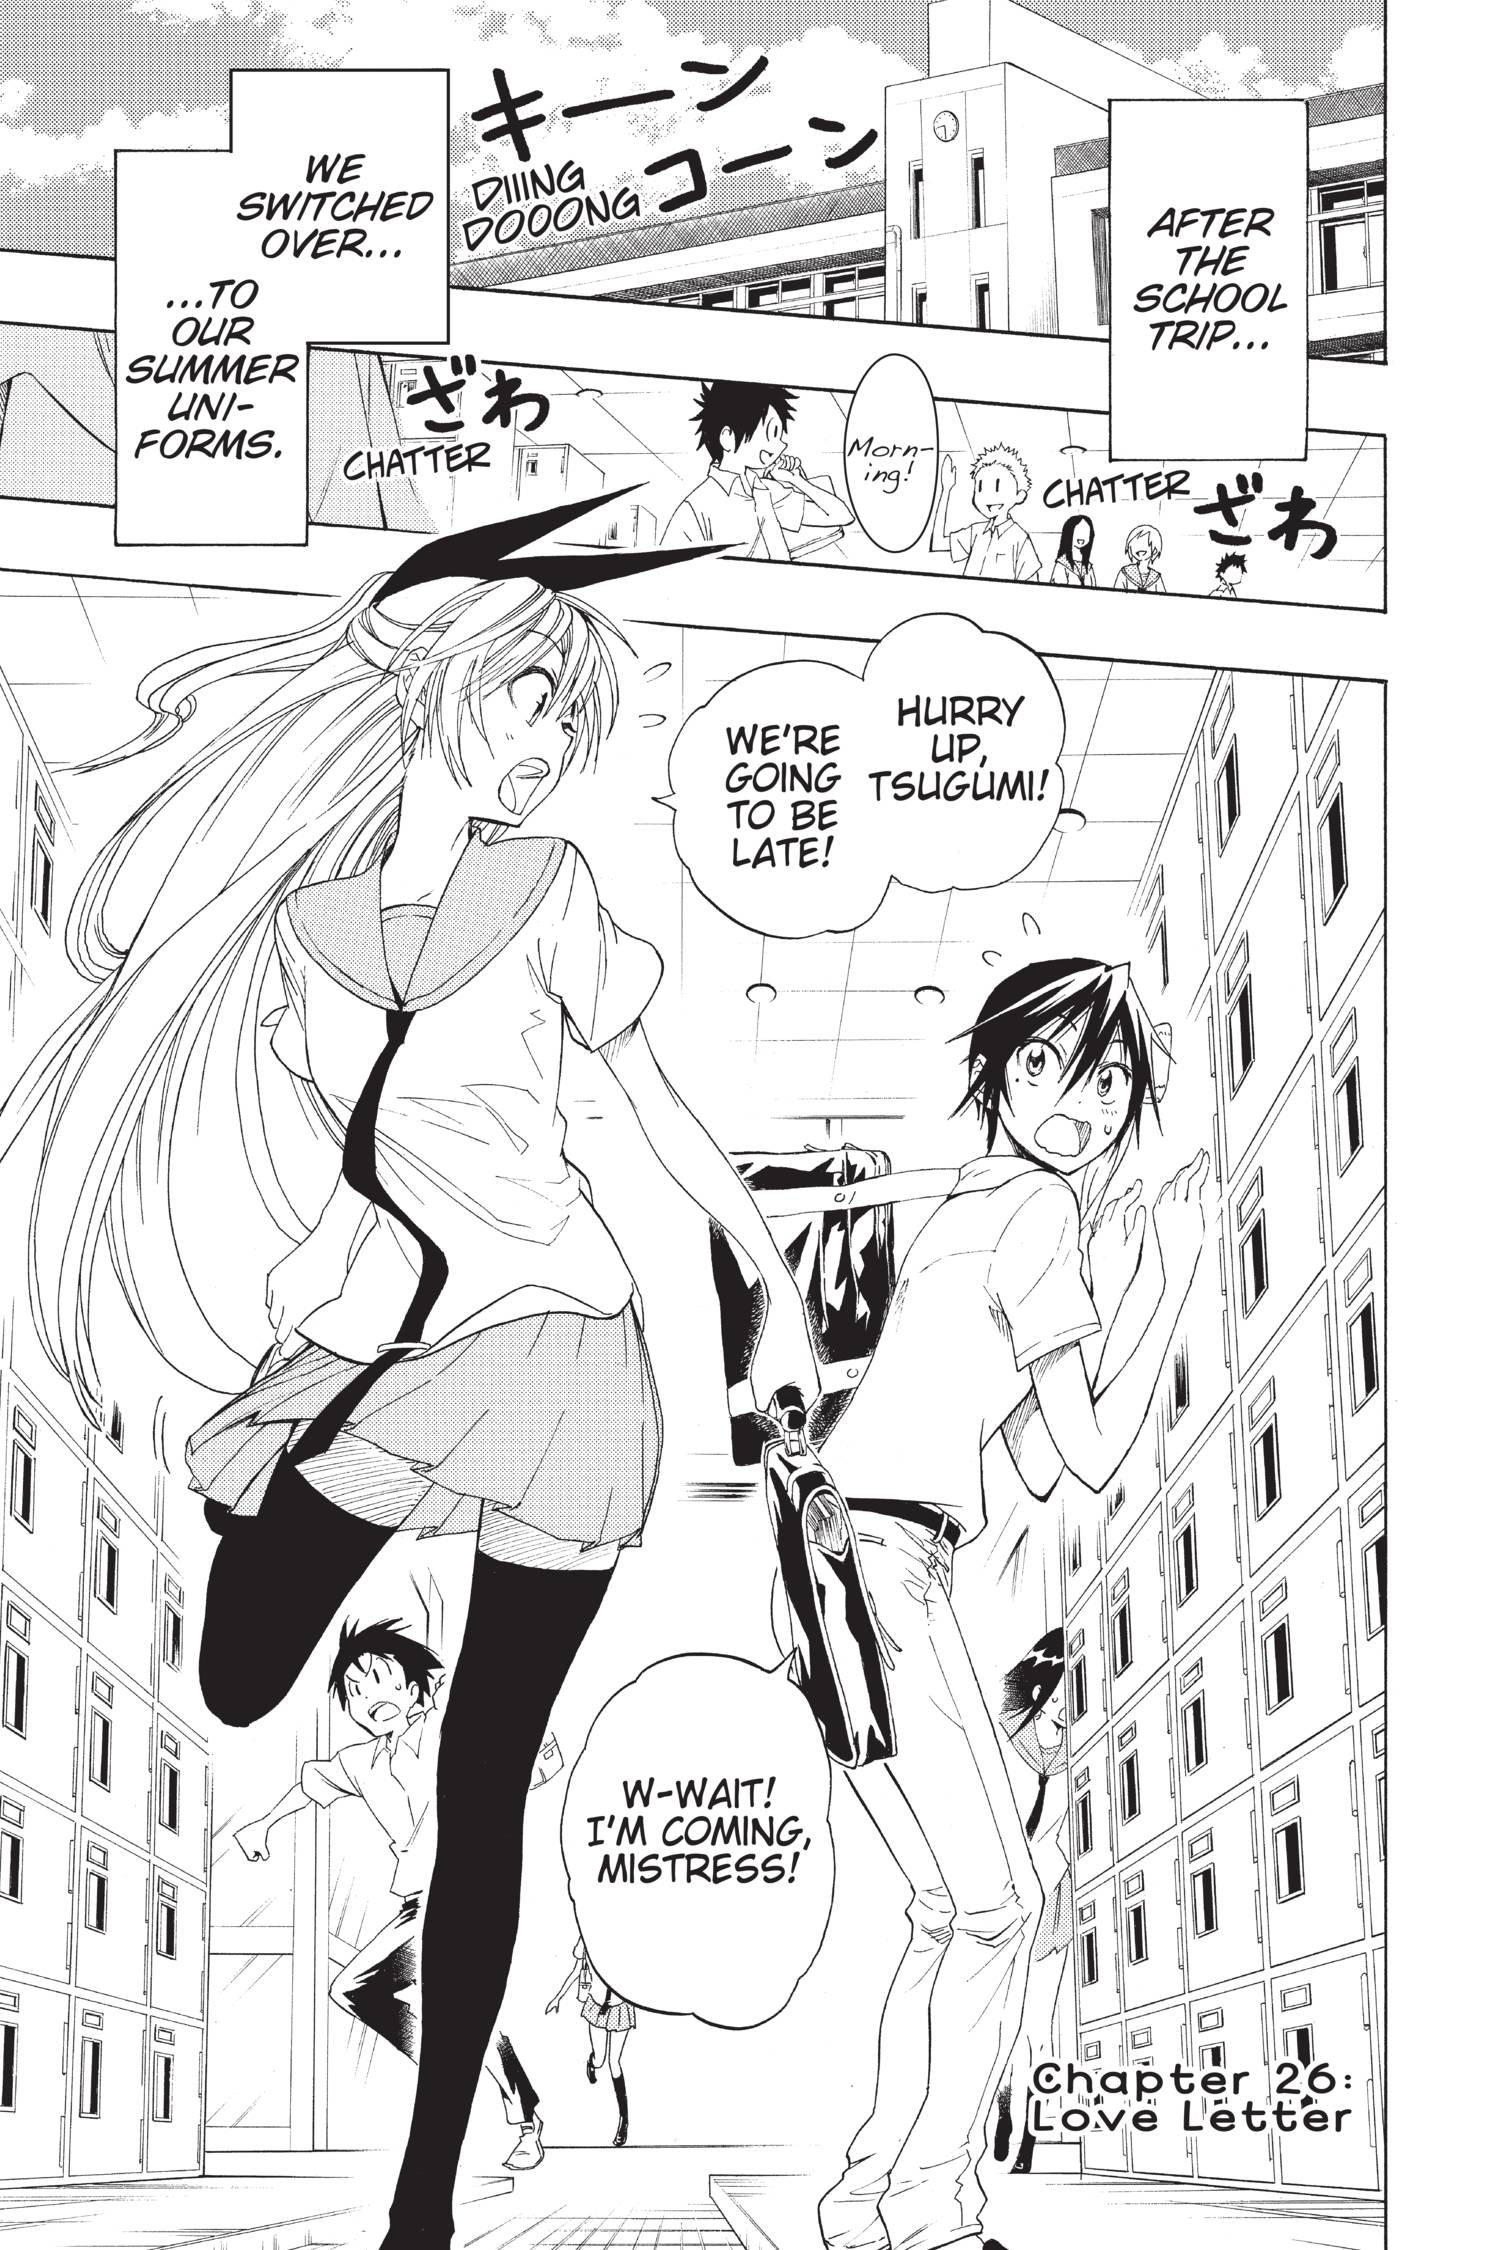 Manga Like Nisekoi: False Love